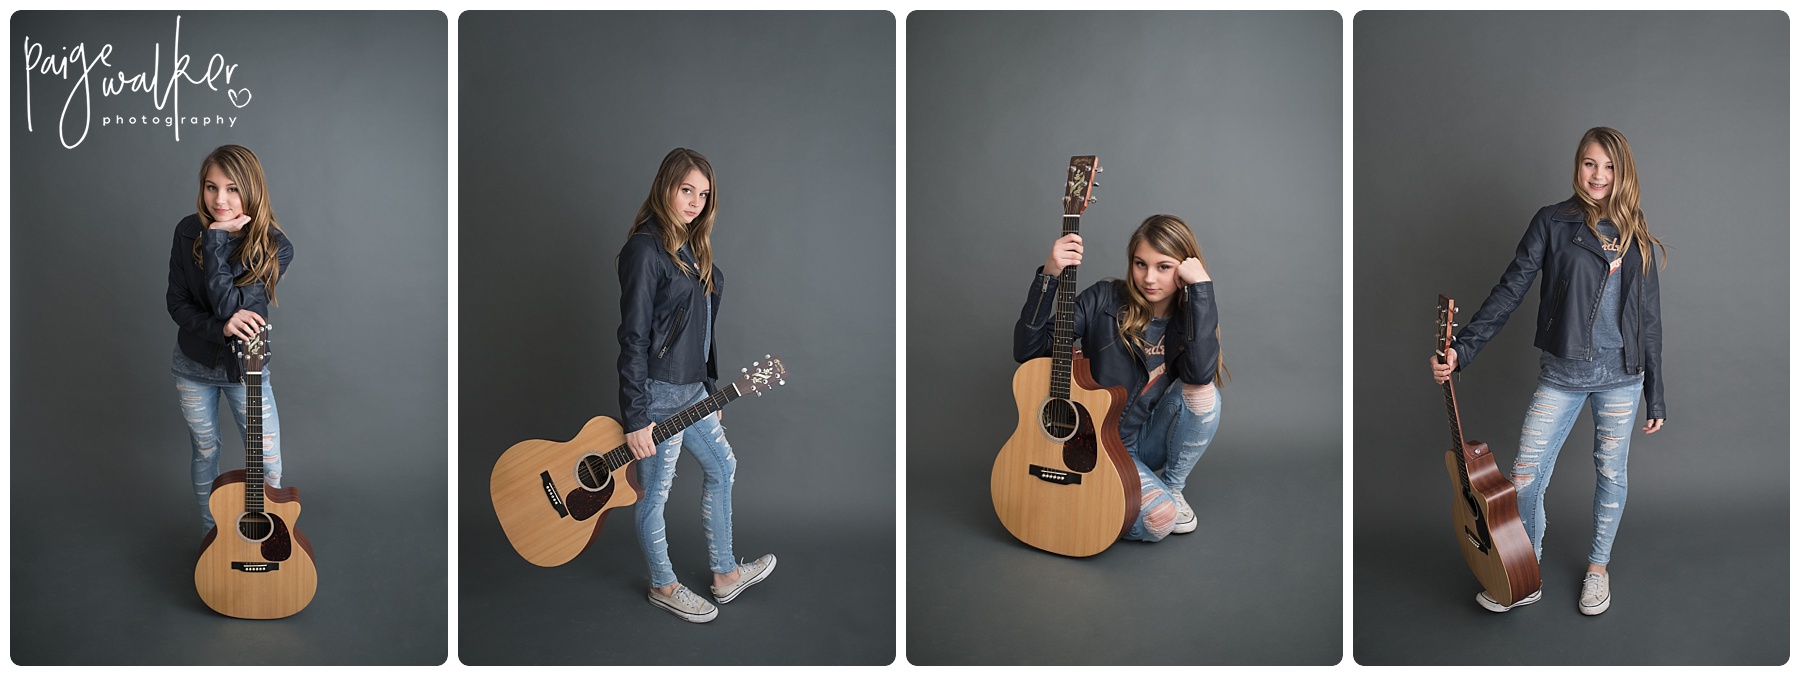 studio posing with a guitar